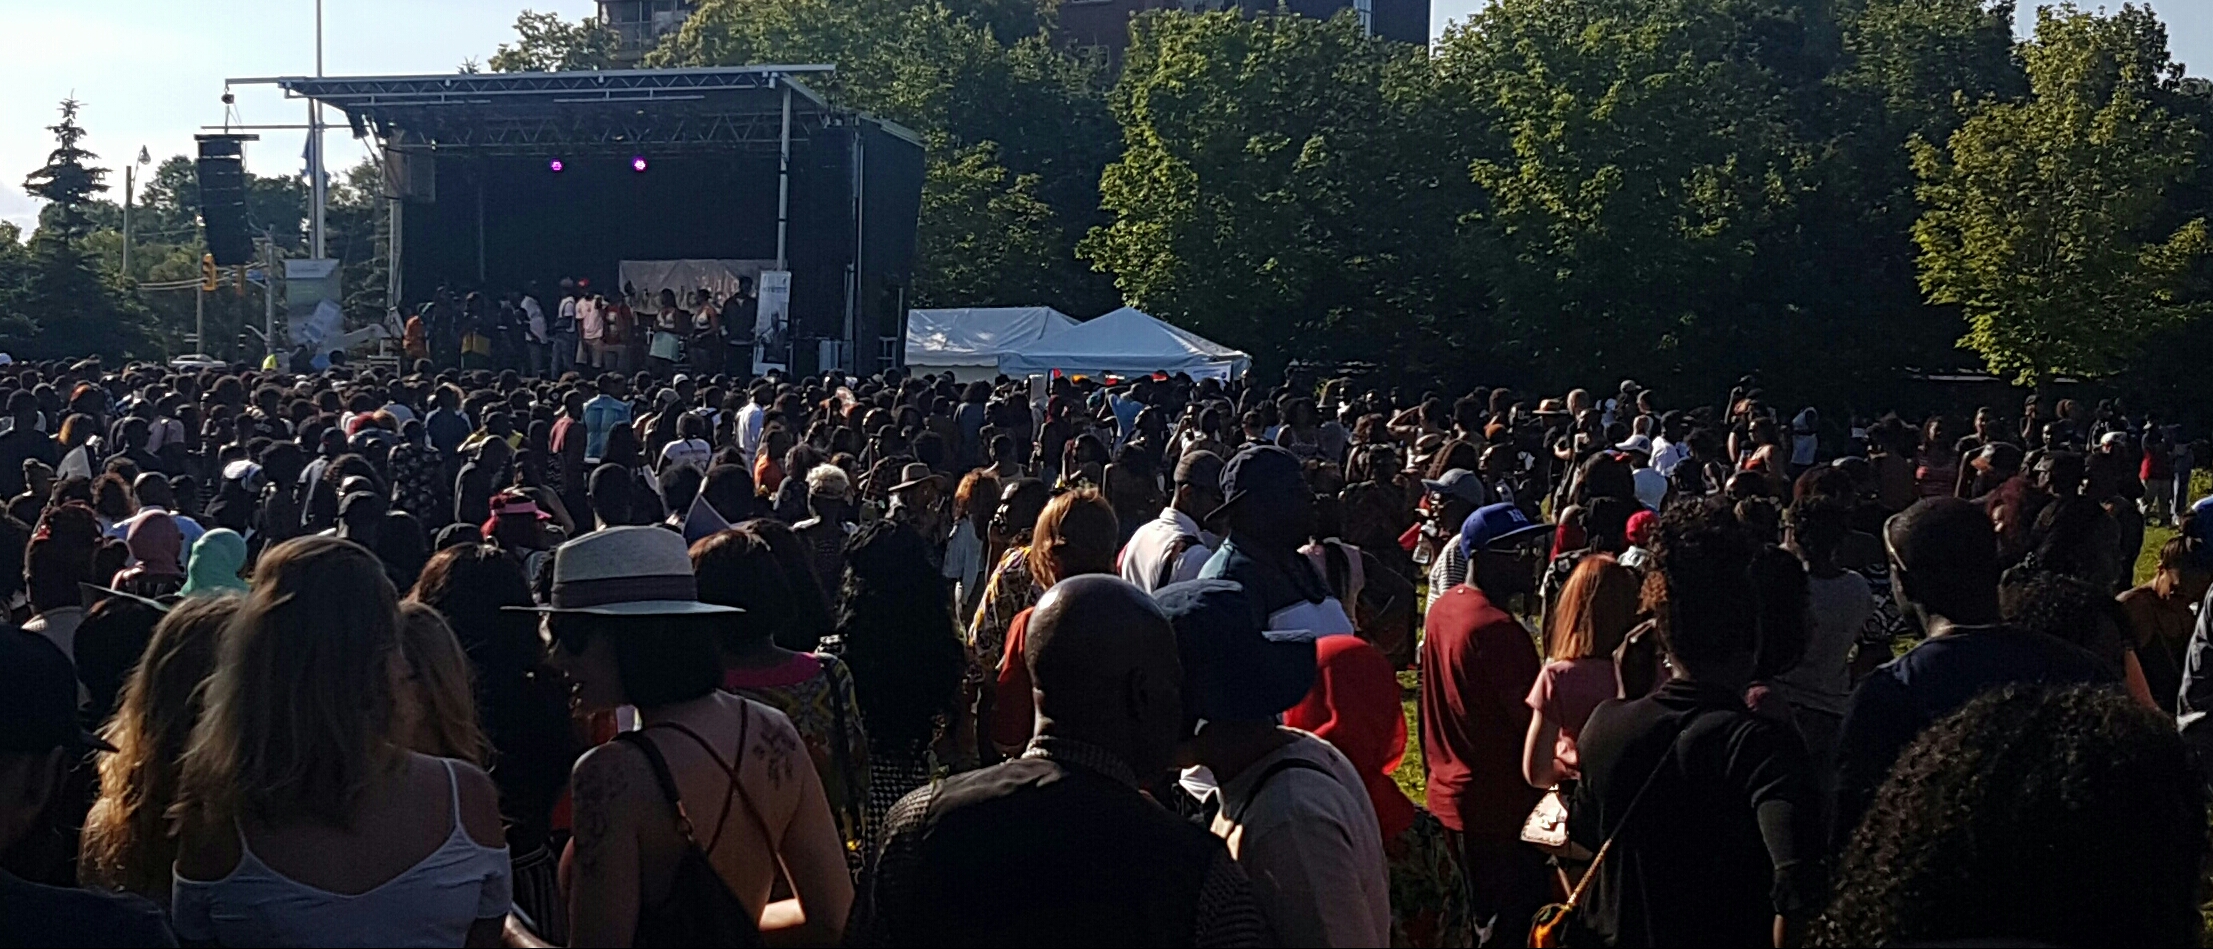 Afrofest underway in Toronto woodbine park